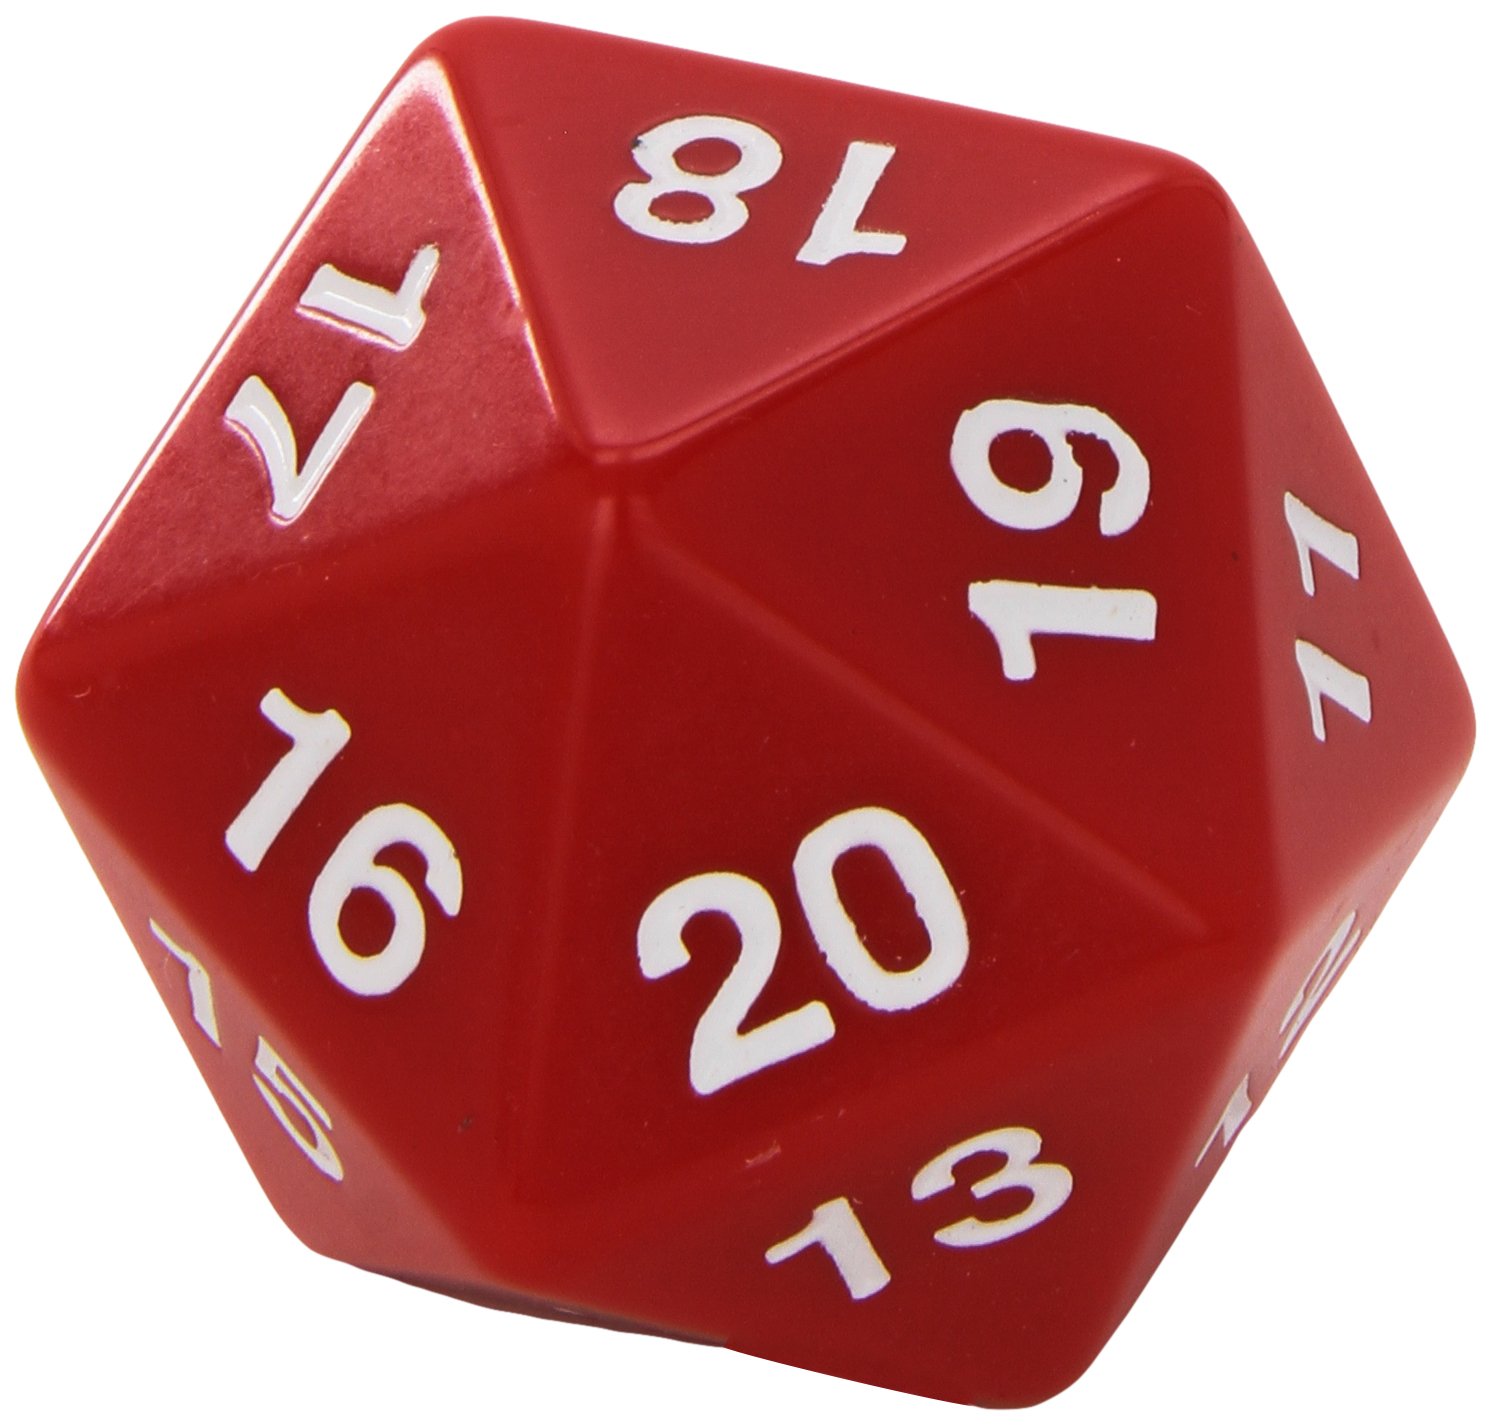 a red twenty-sided dice